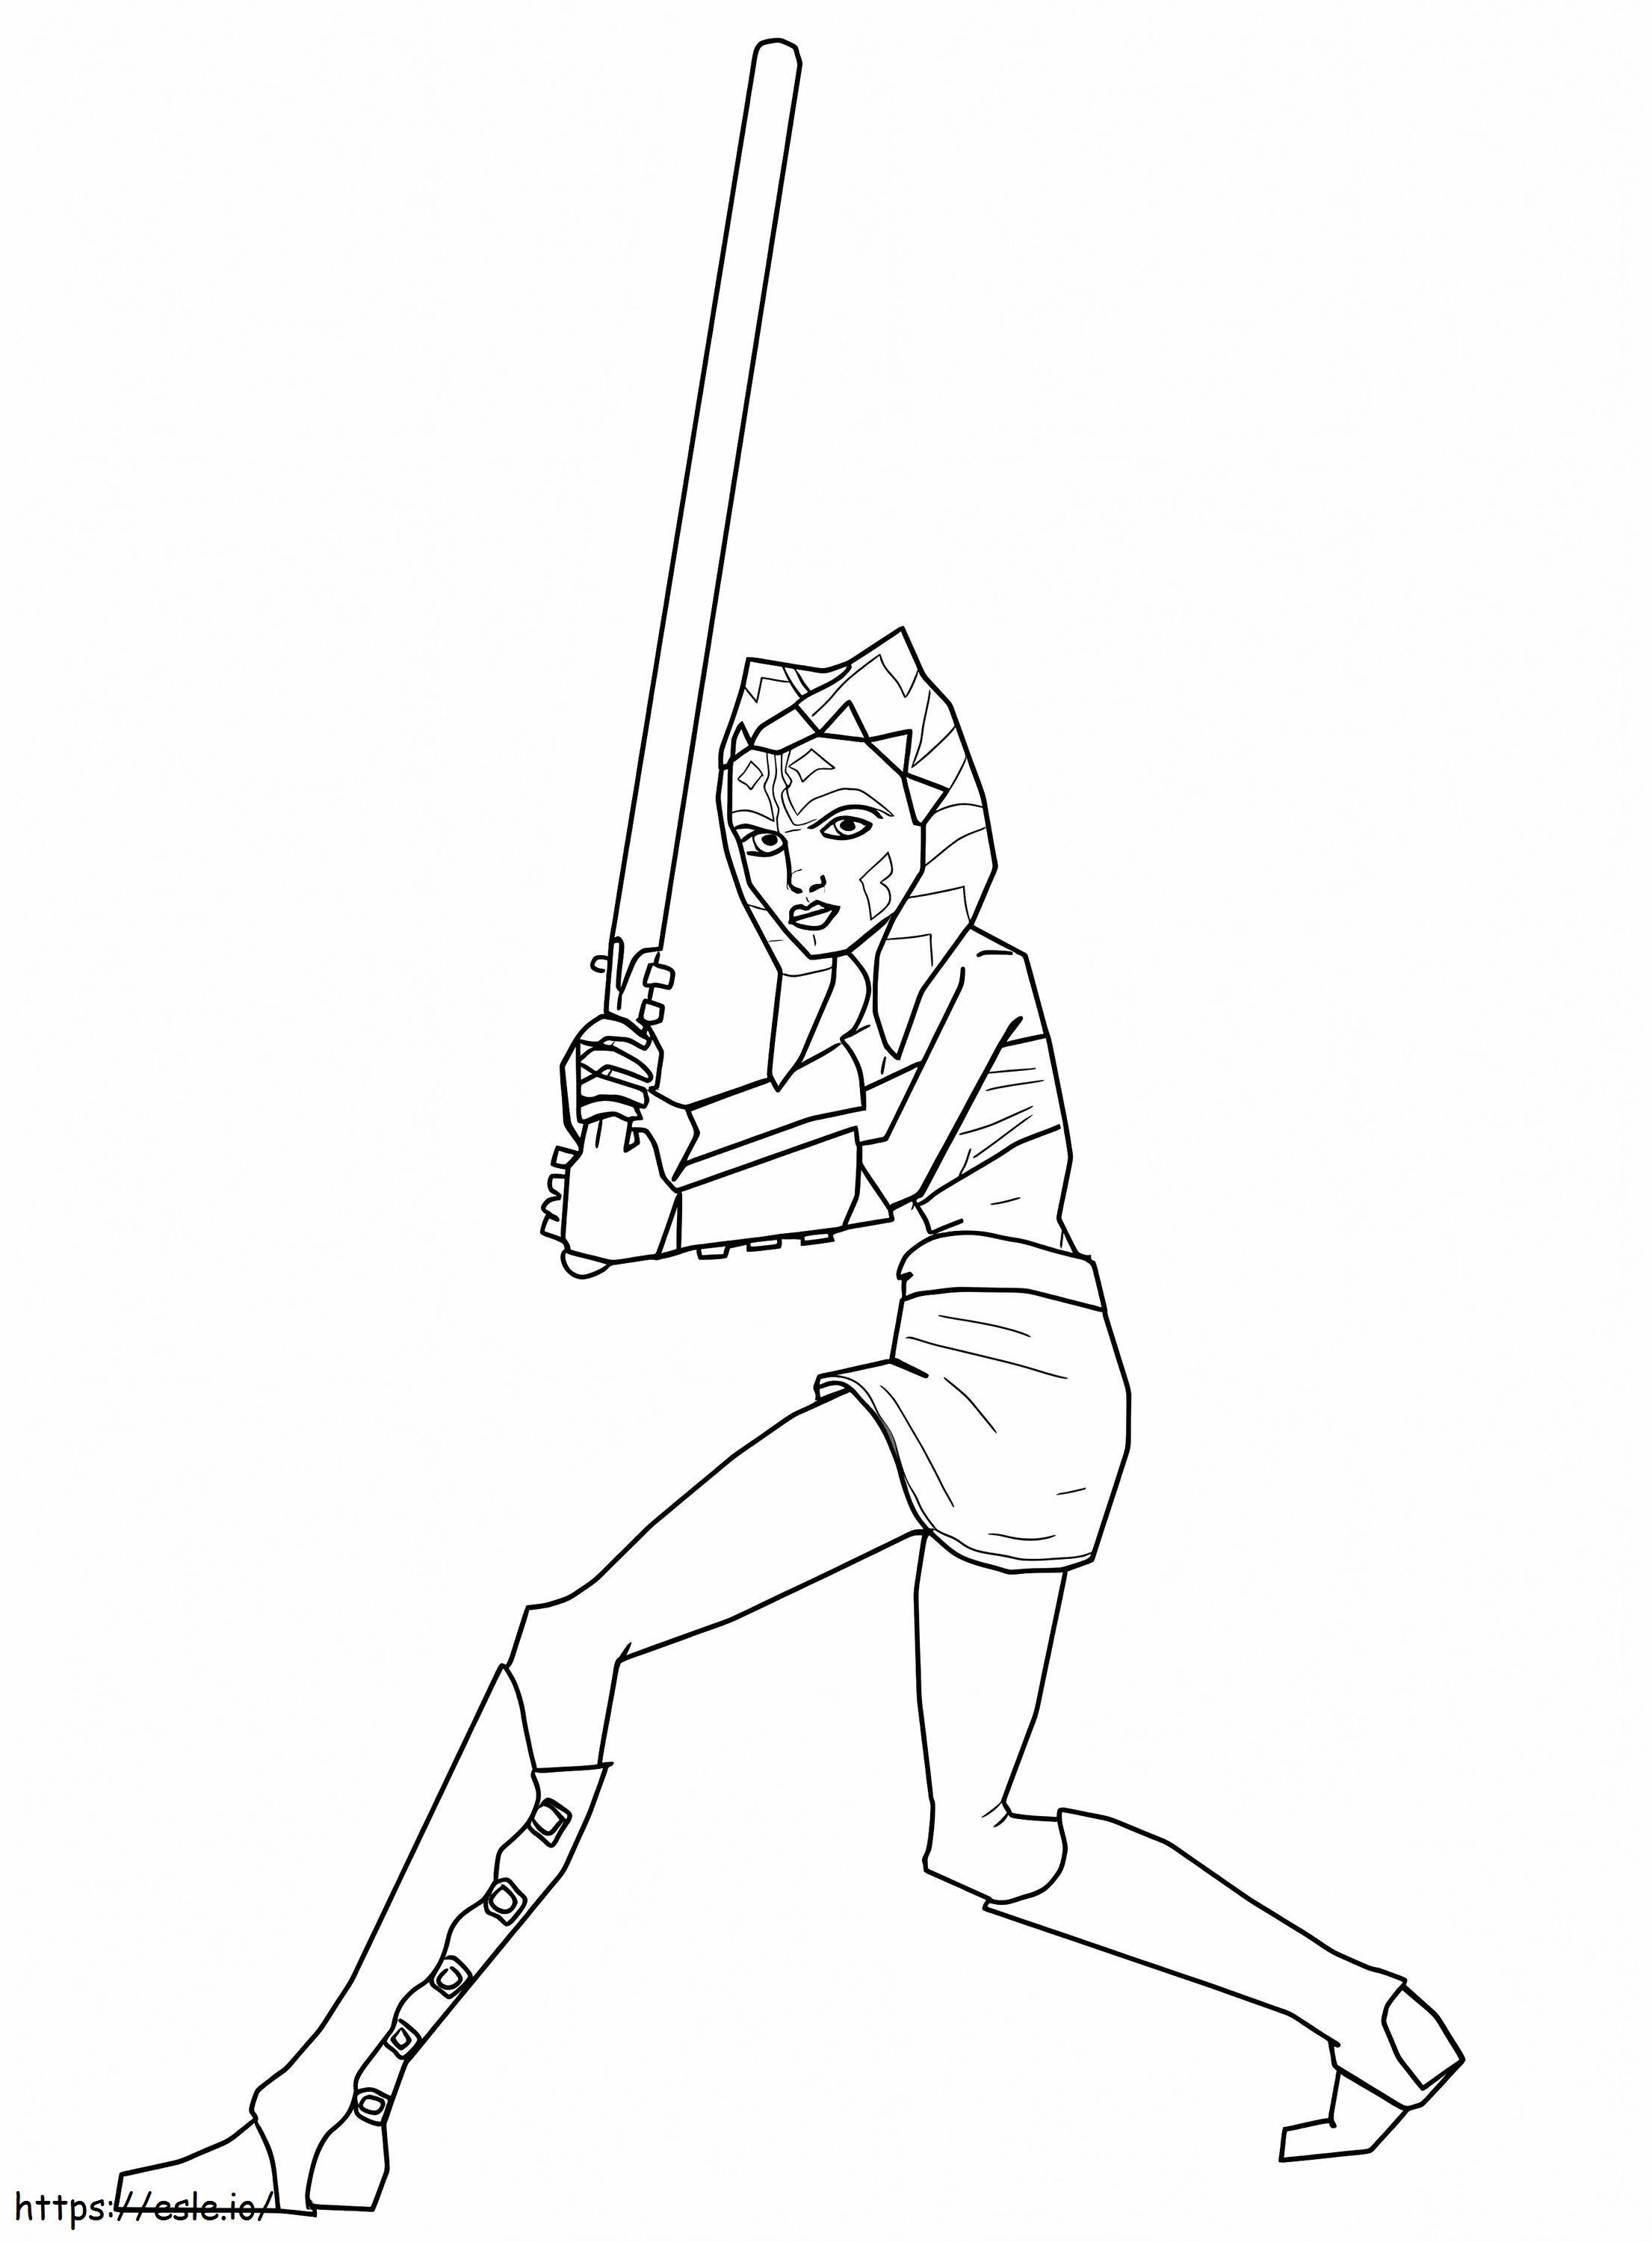 Ahsoka Tano From Star Wars coloring page